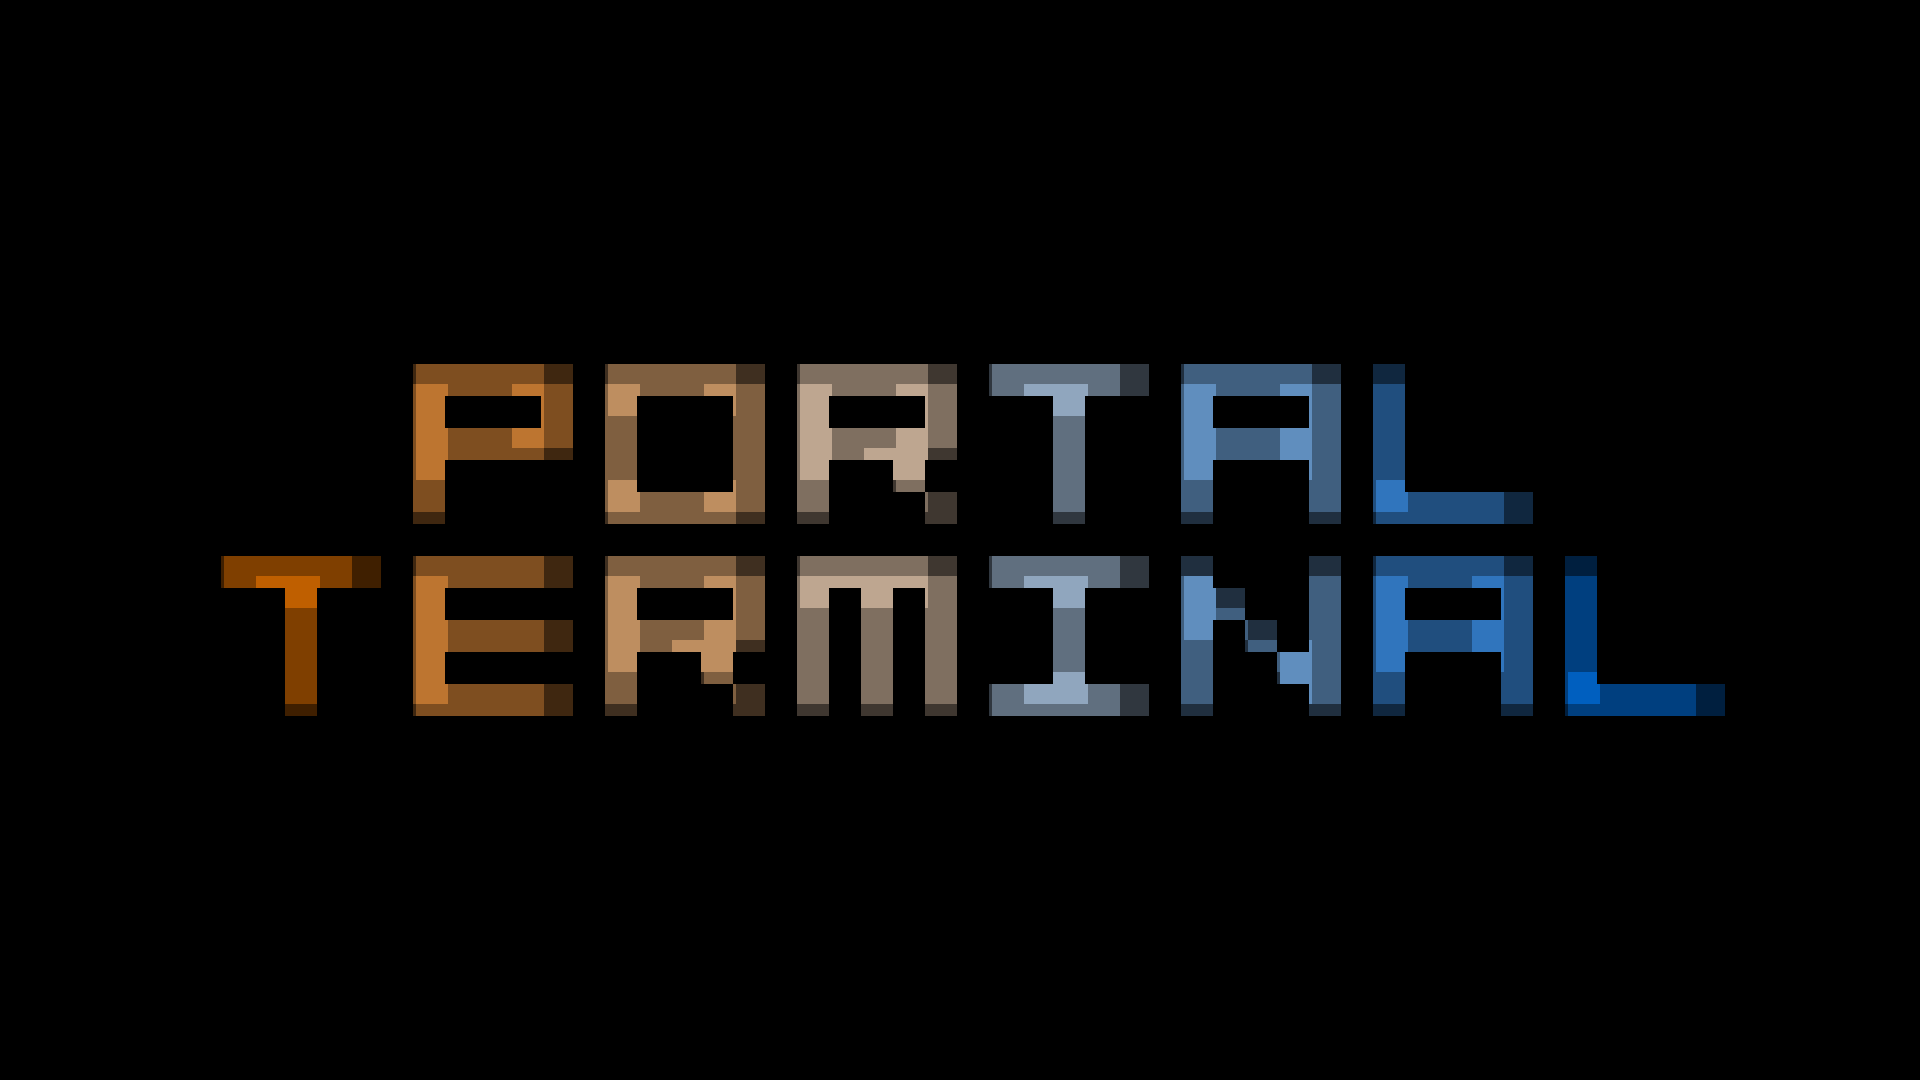 Mgs terminal portal. MGS терминал портал. МГС терминал портал.